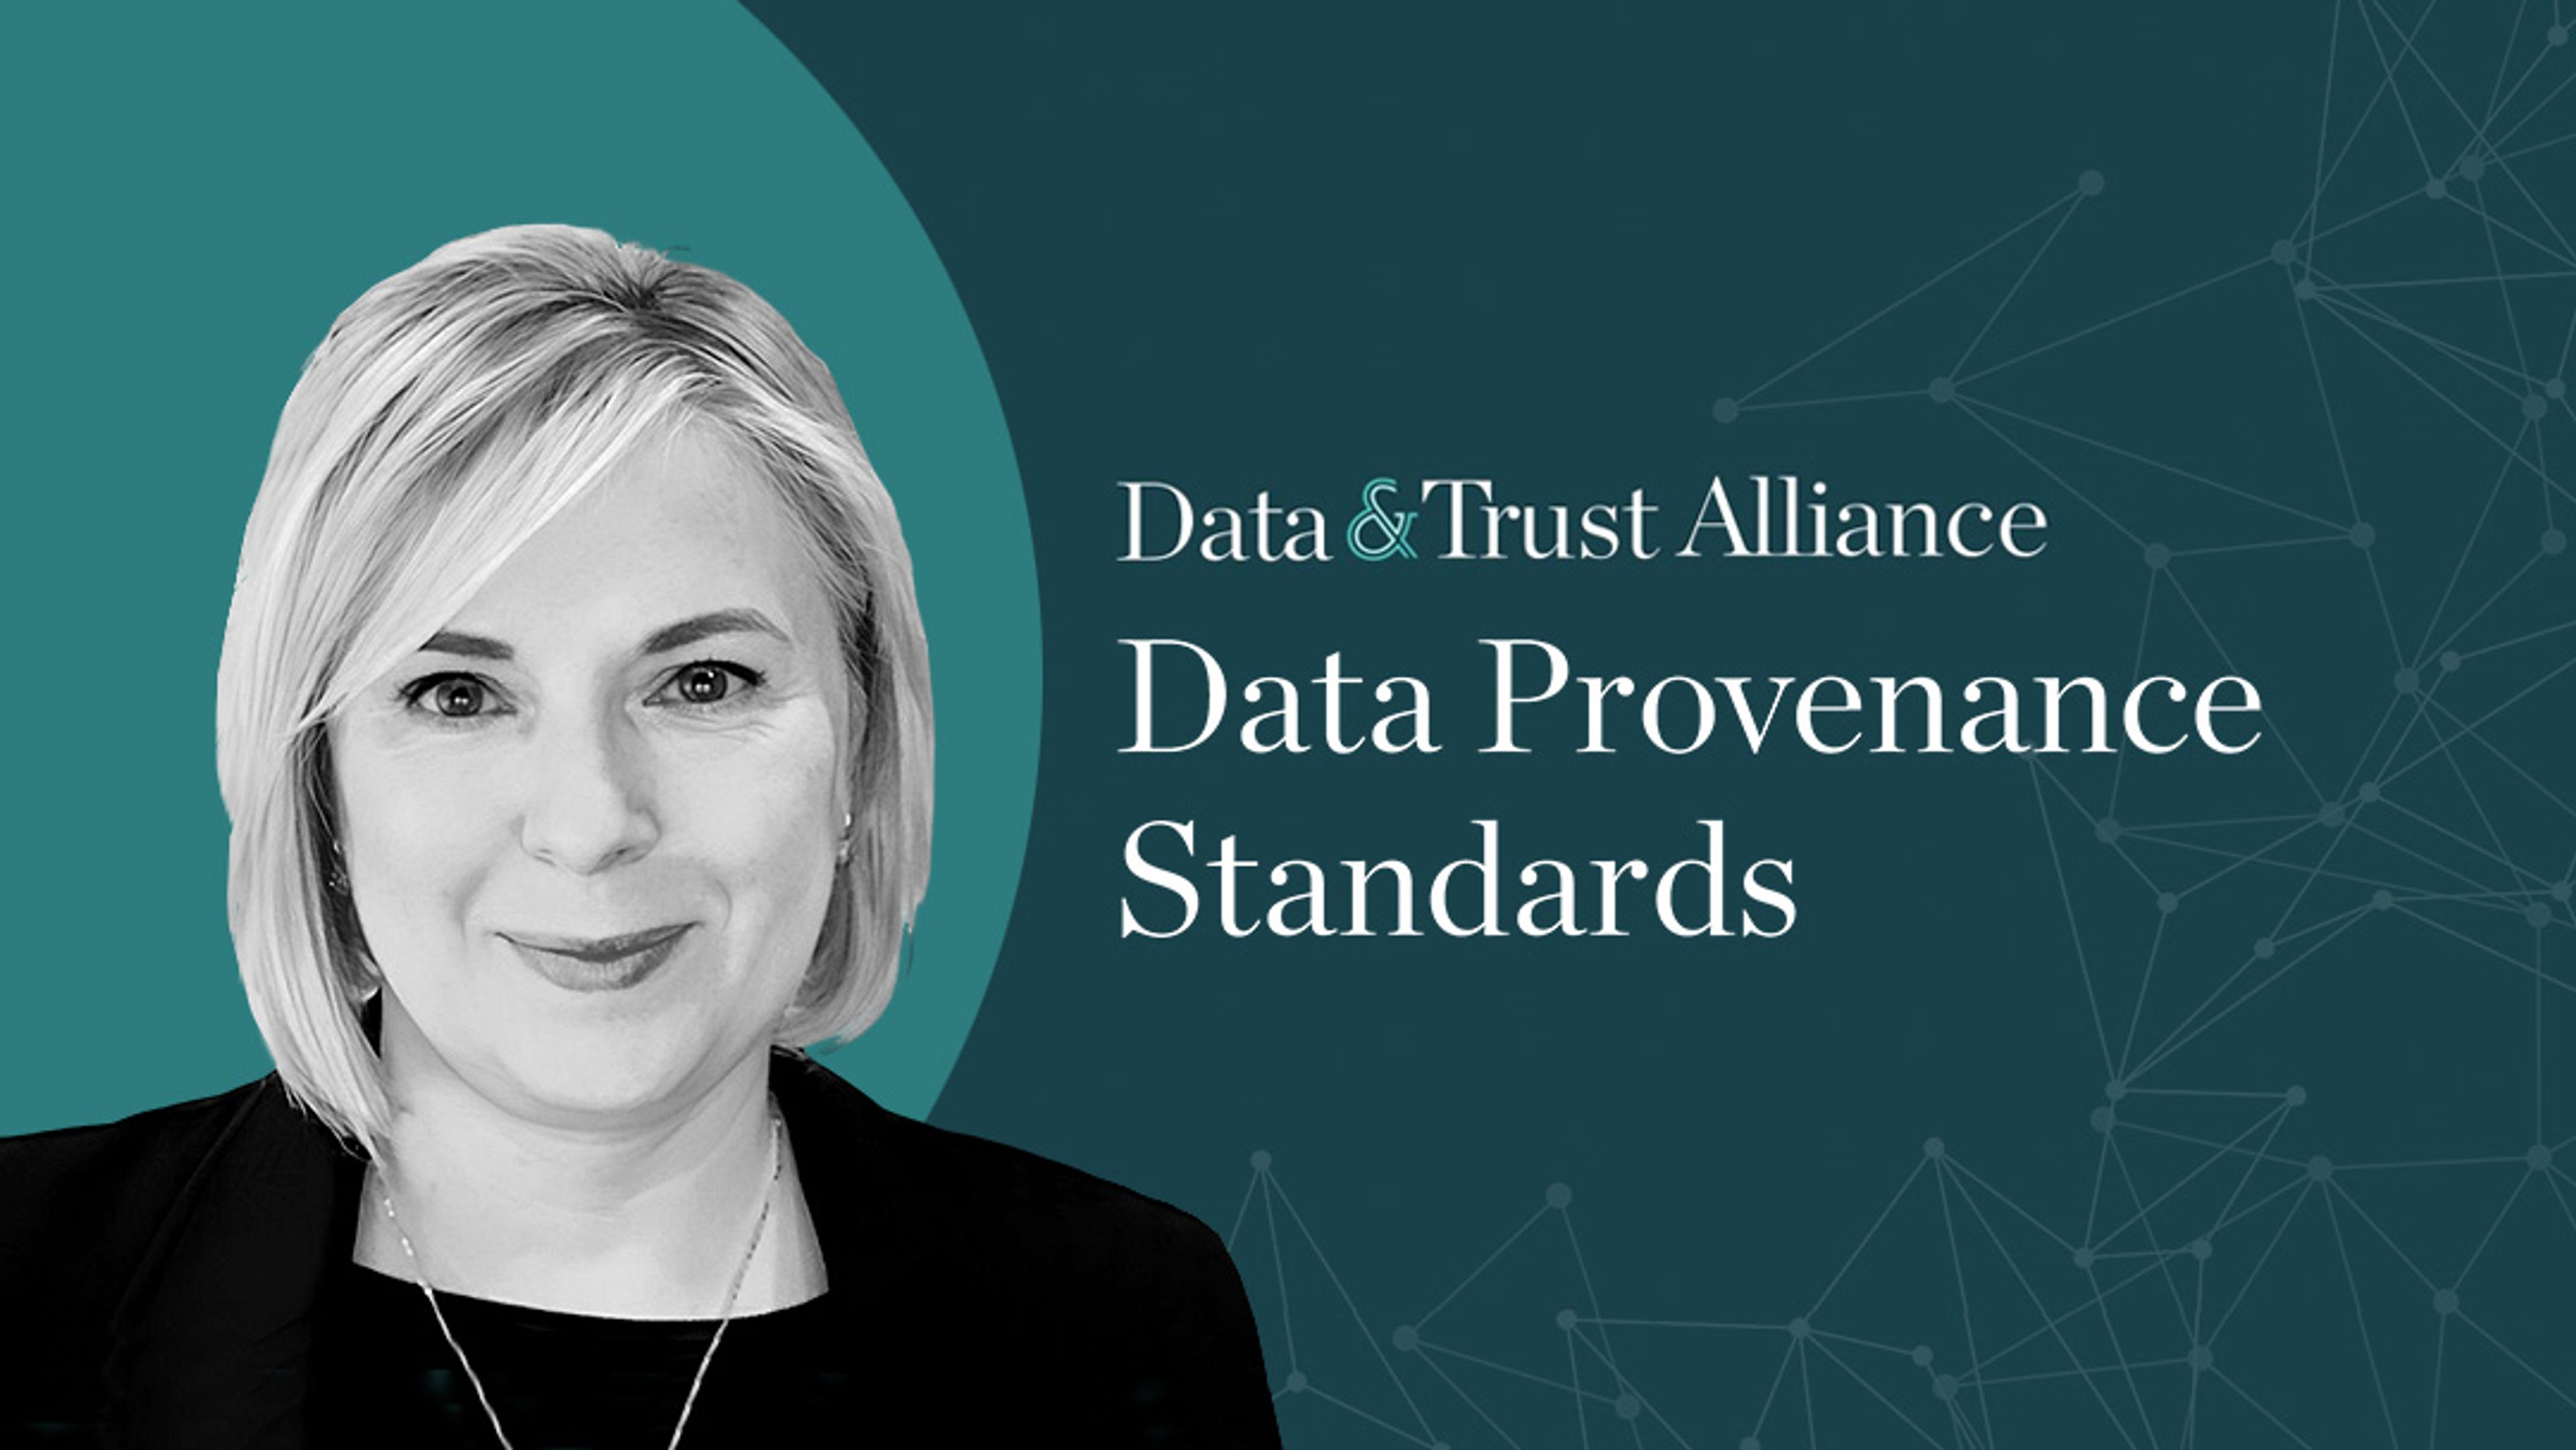 Headshot of Kristina Podnar with text reading Data & Trust Alliance, below it "Data Provenance Standards"